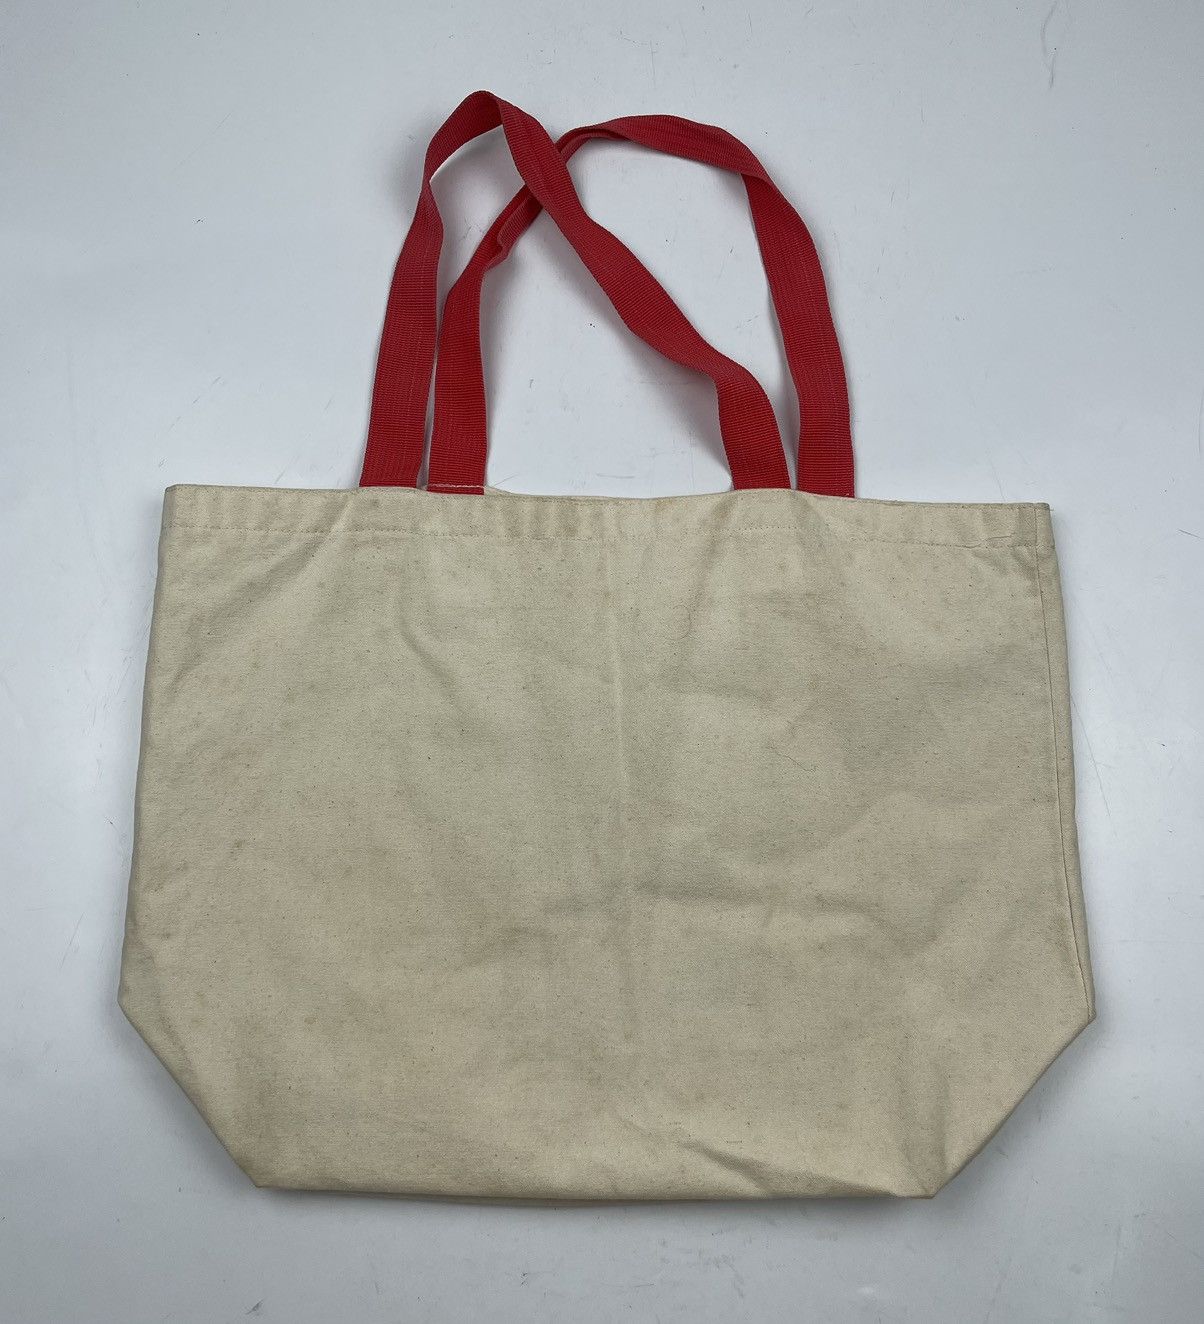 Japanese Brand - hello kitty tote bag tc21 - 8